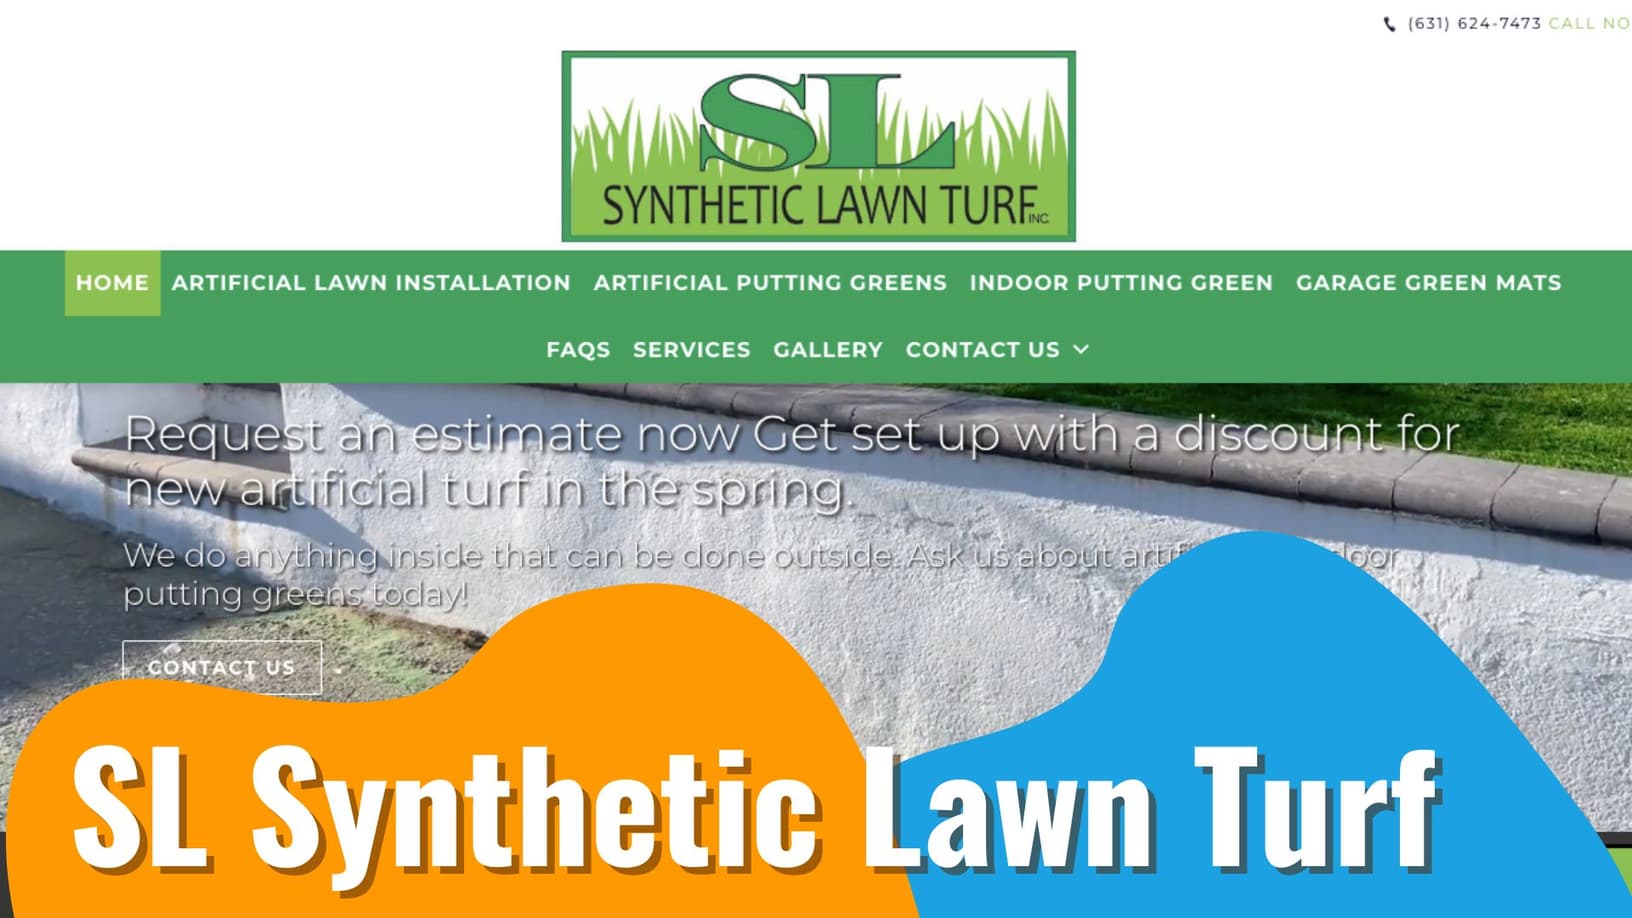 SL Synthetic Lawn Turf New York City